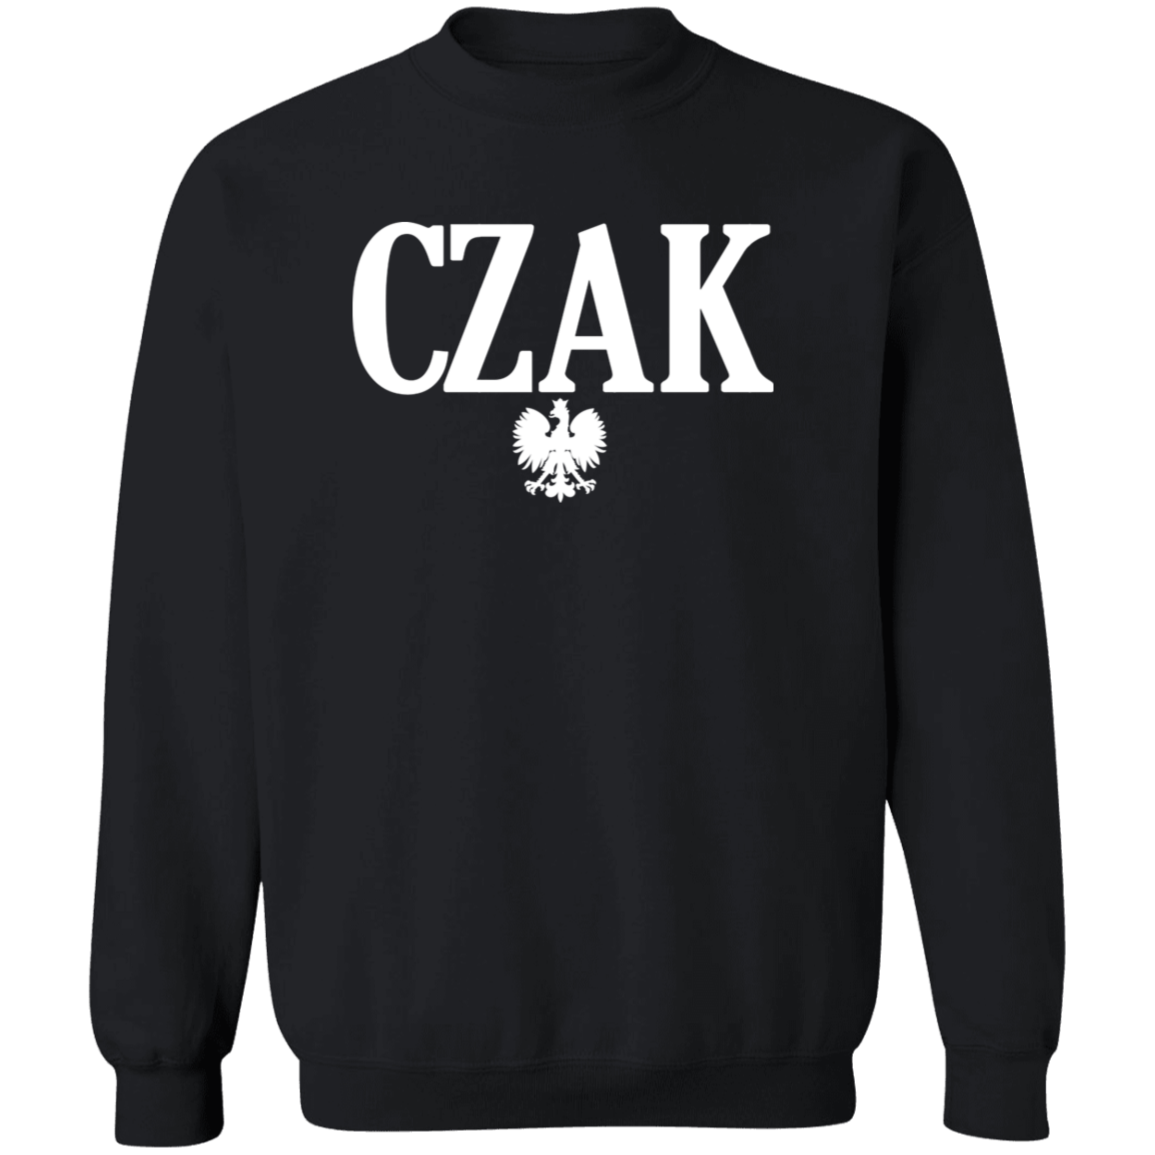 CZAK Polish Surname Ending Apparel CustomCat G180 Crewneck Pullover Sweatshirt Black S